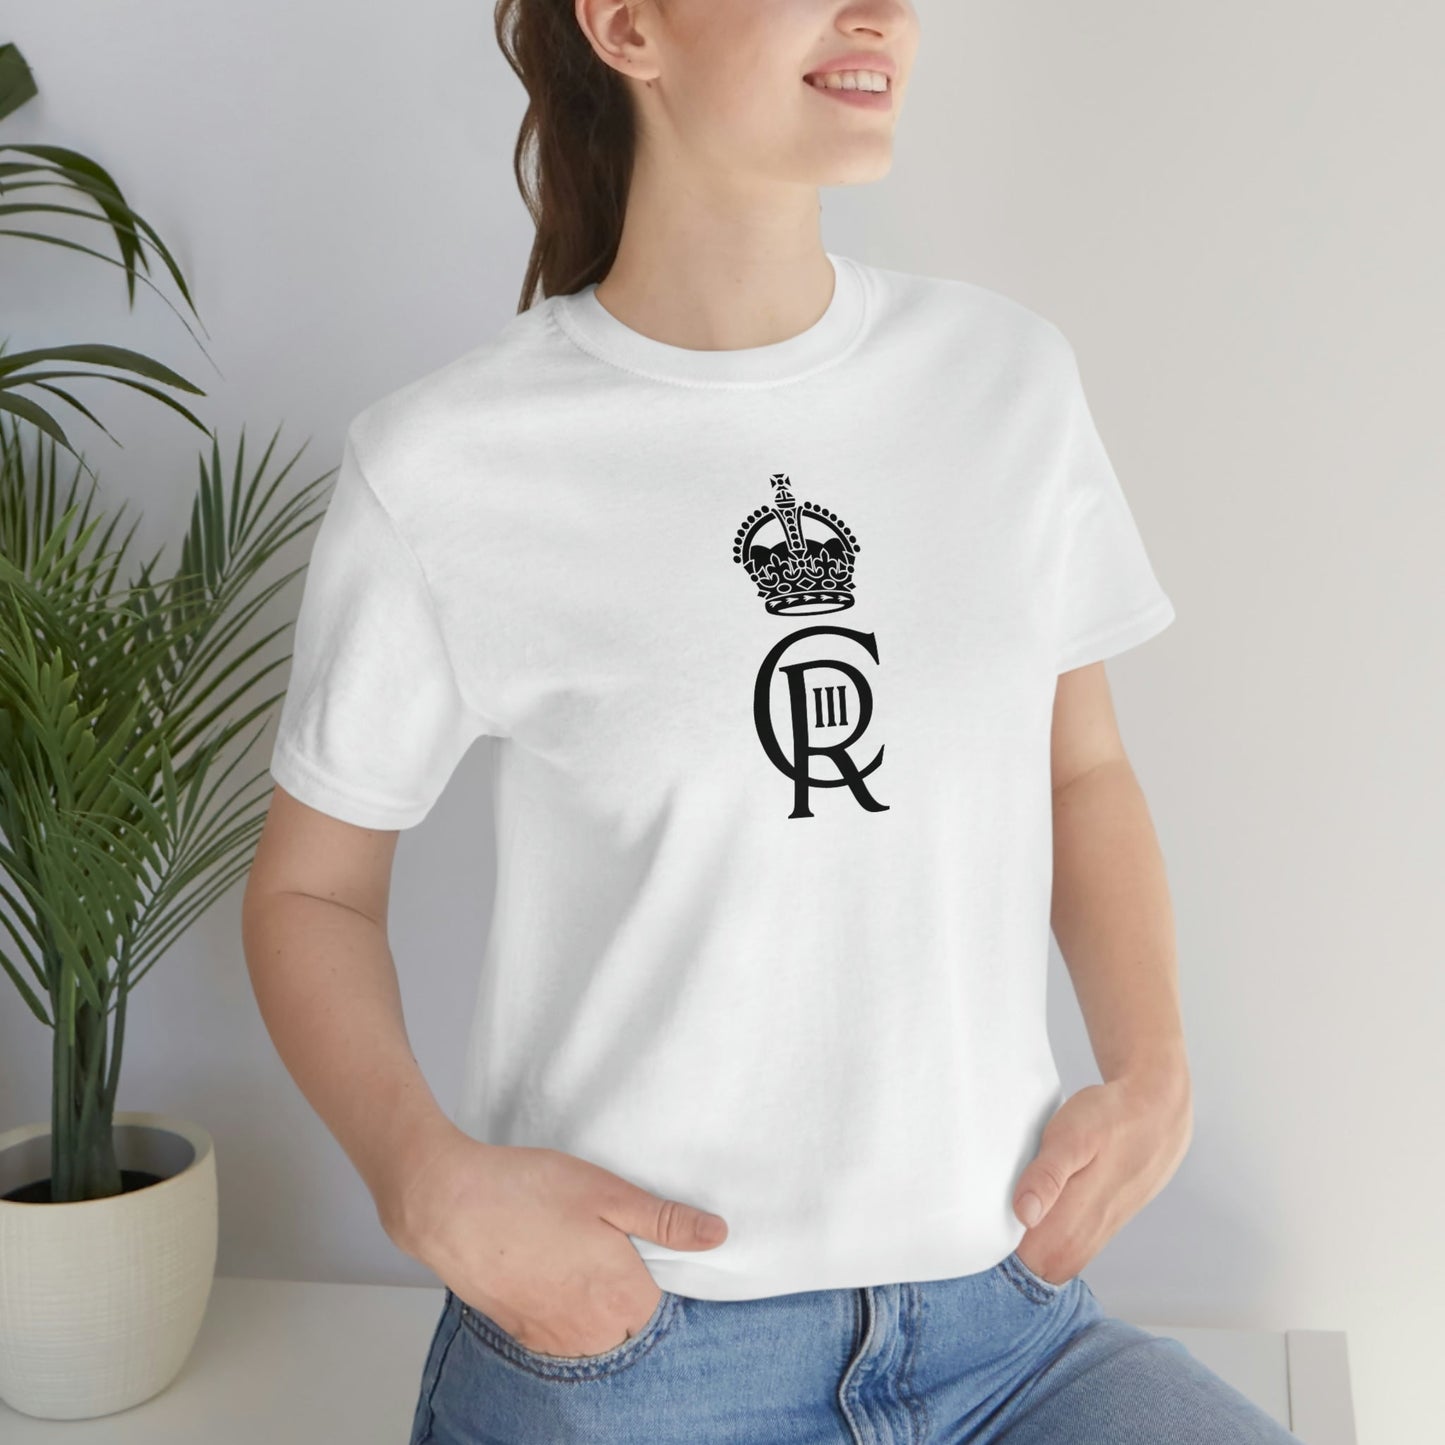 King Charles III Royal Cypher T-Shirt